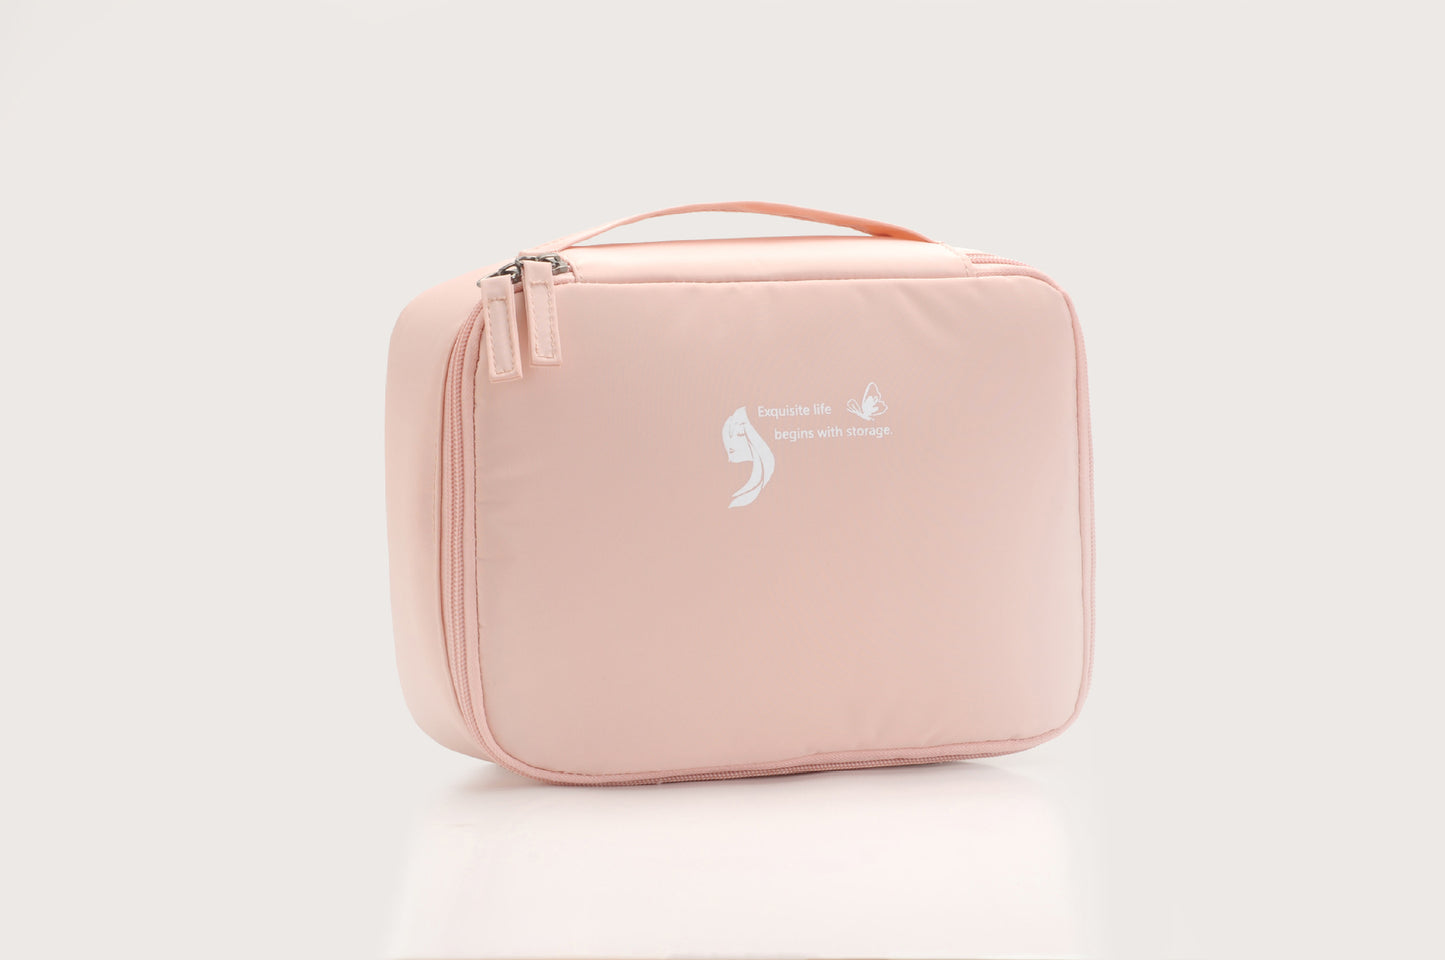 Travel Cosmetic Storage Bag